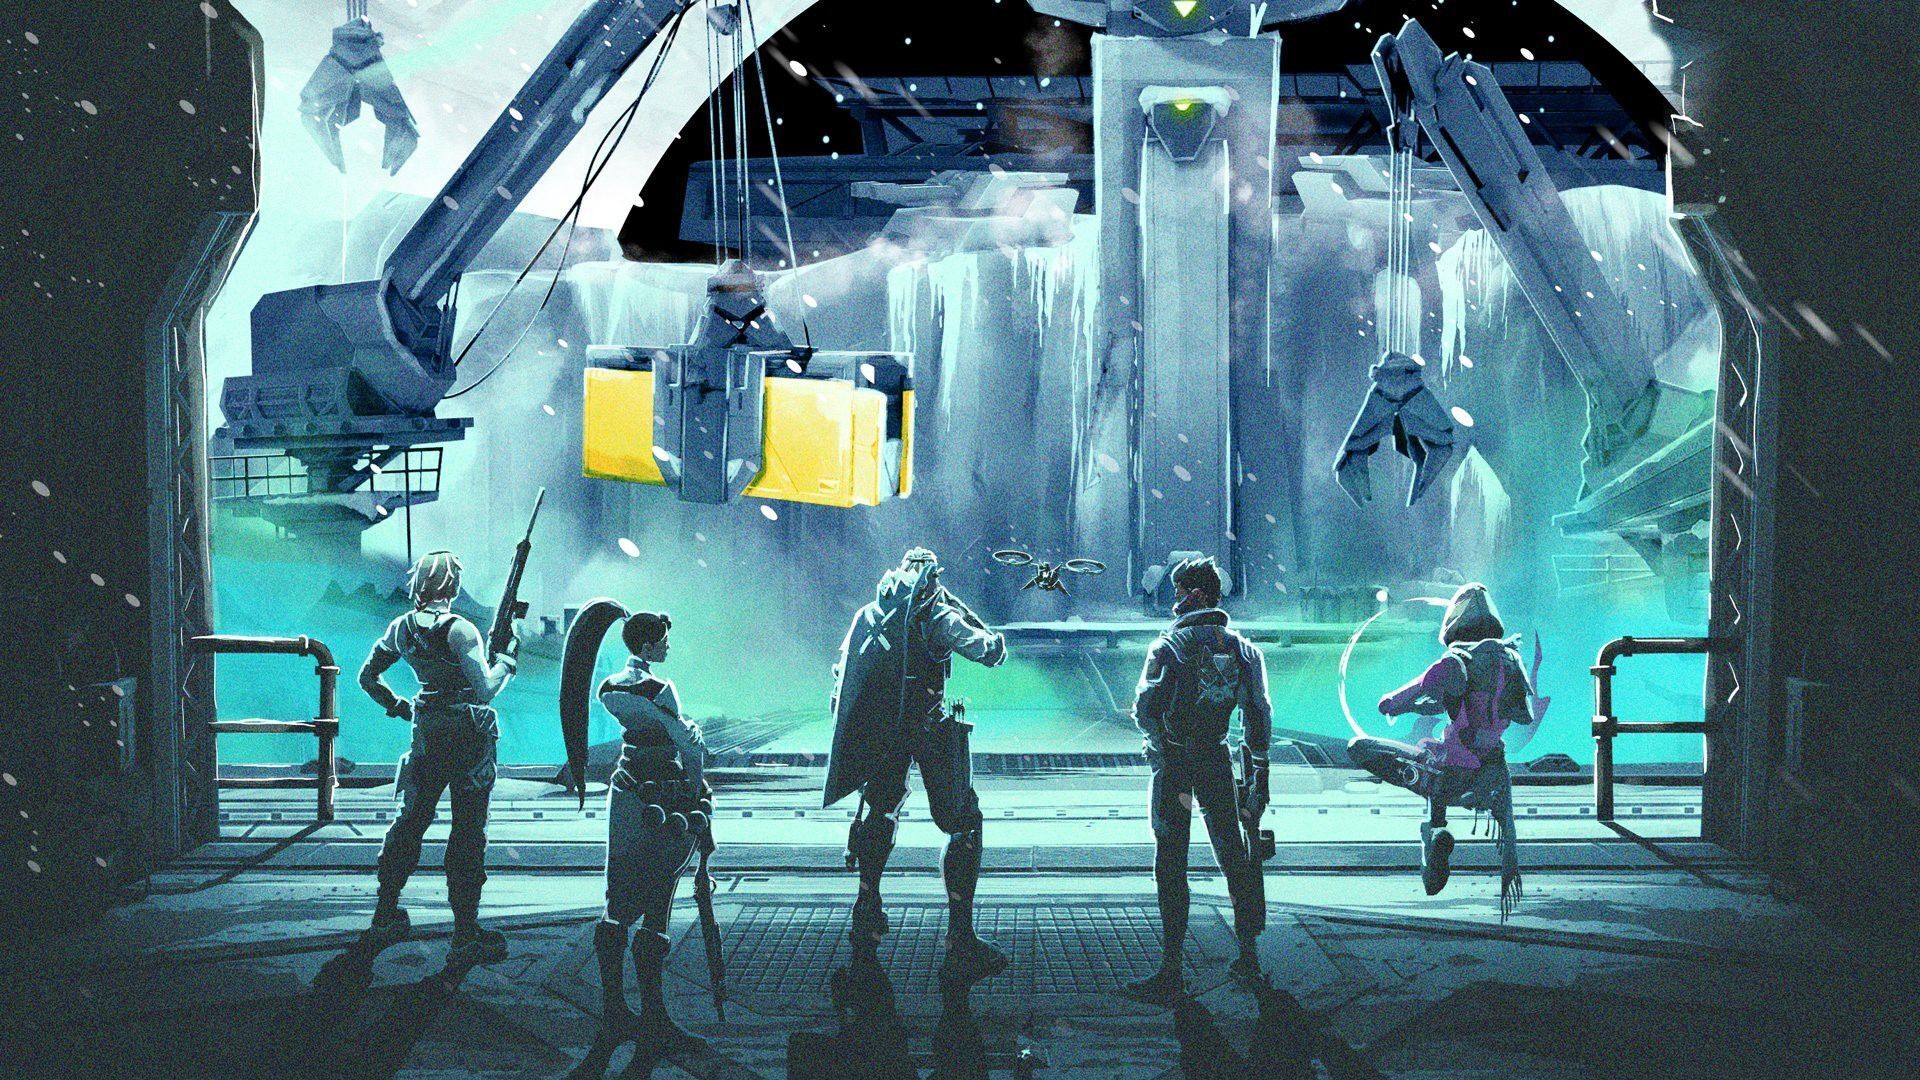 Image by Riot Games – Skye, Sage, Sova, Yoru, and Astra on Icebox.